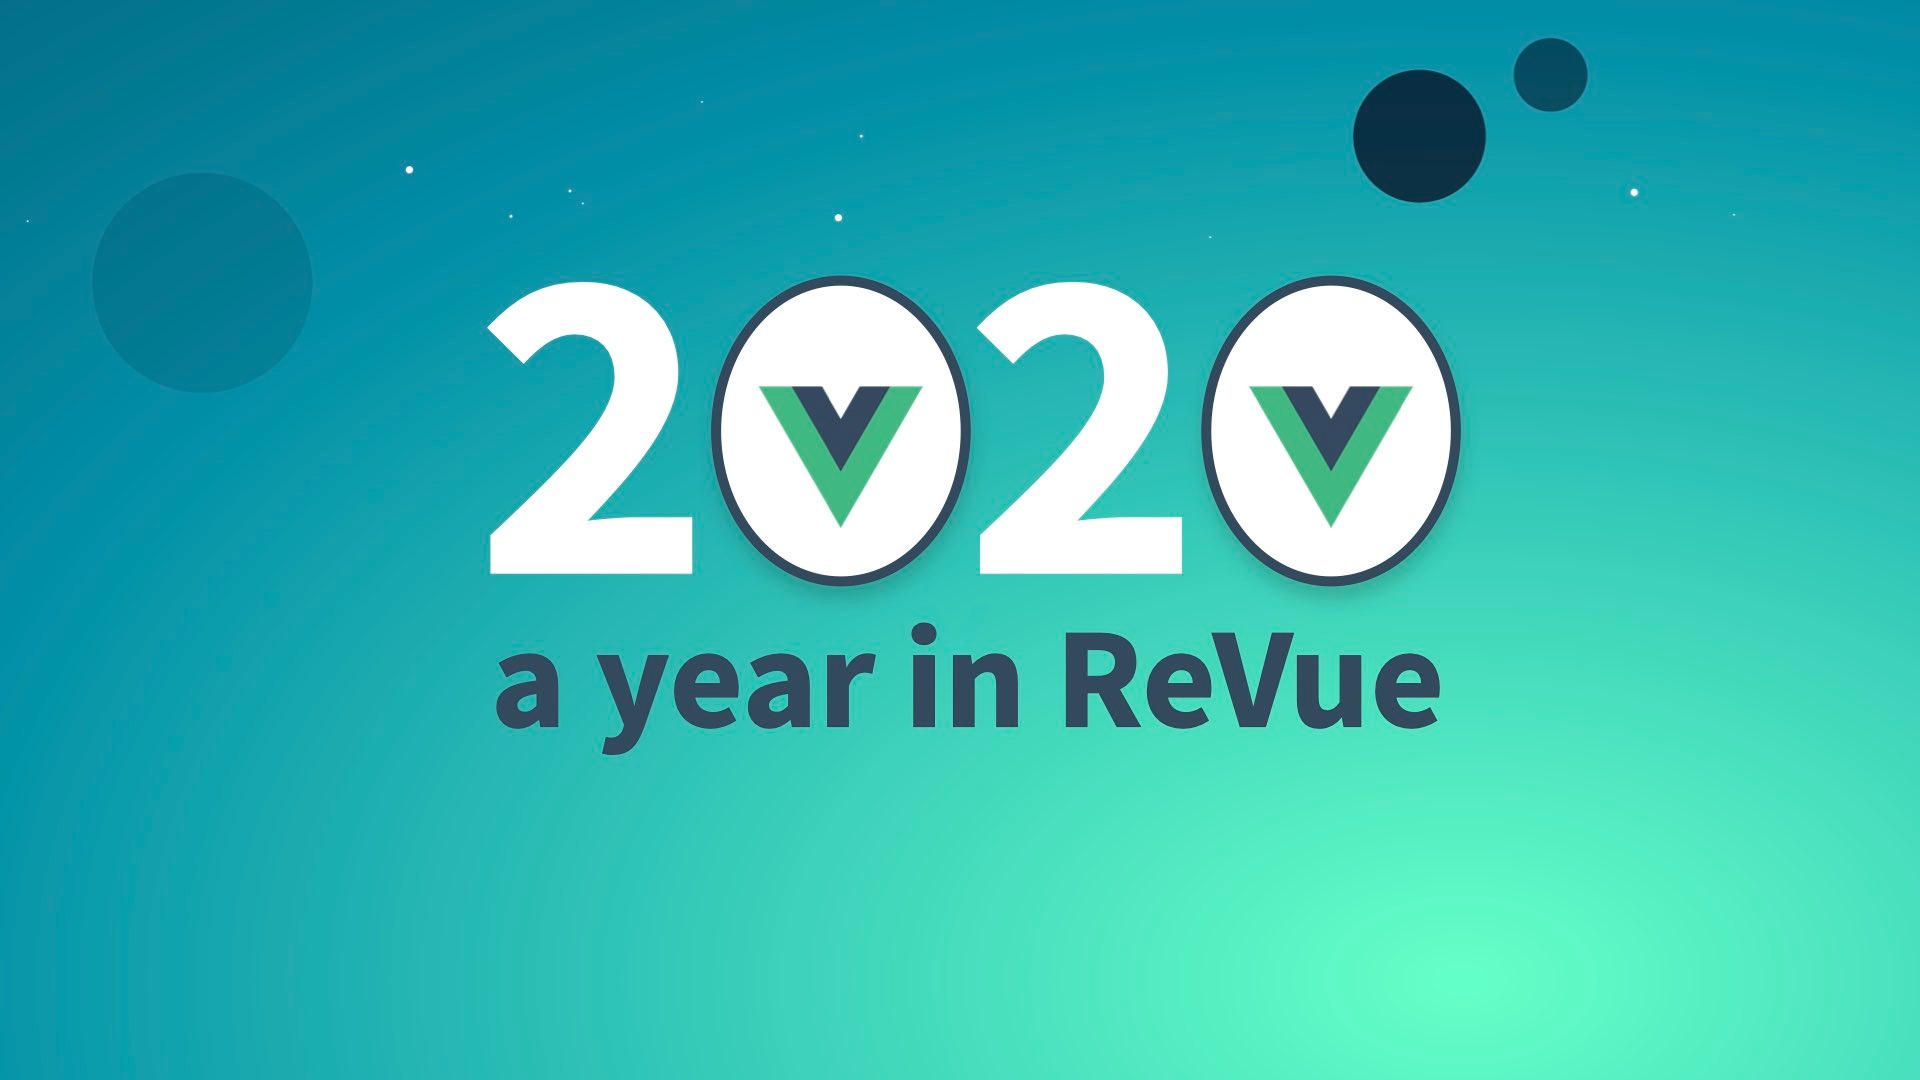 Where will Vue go in 2021?